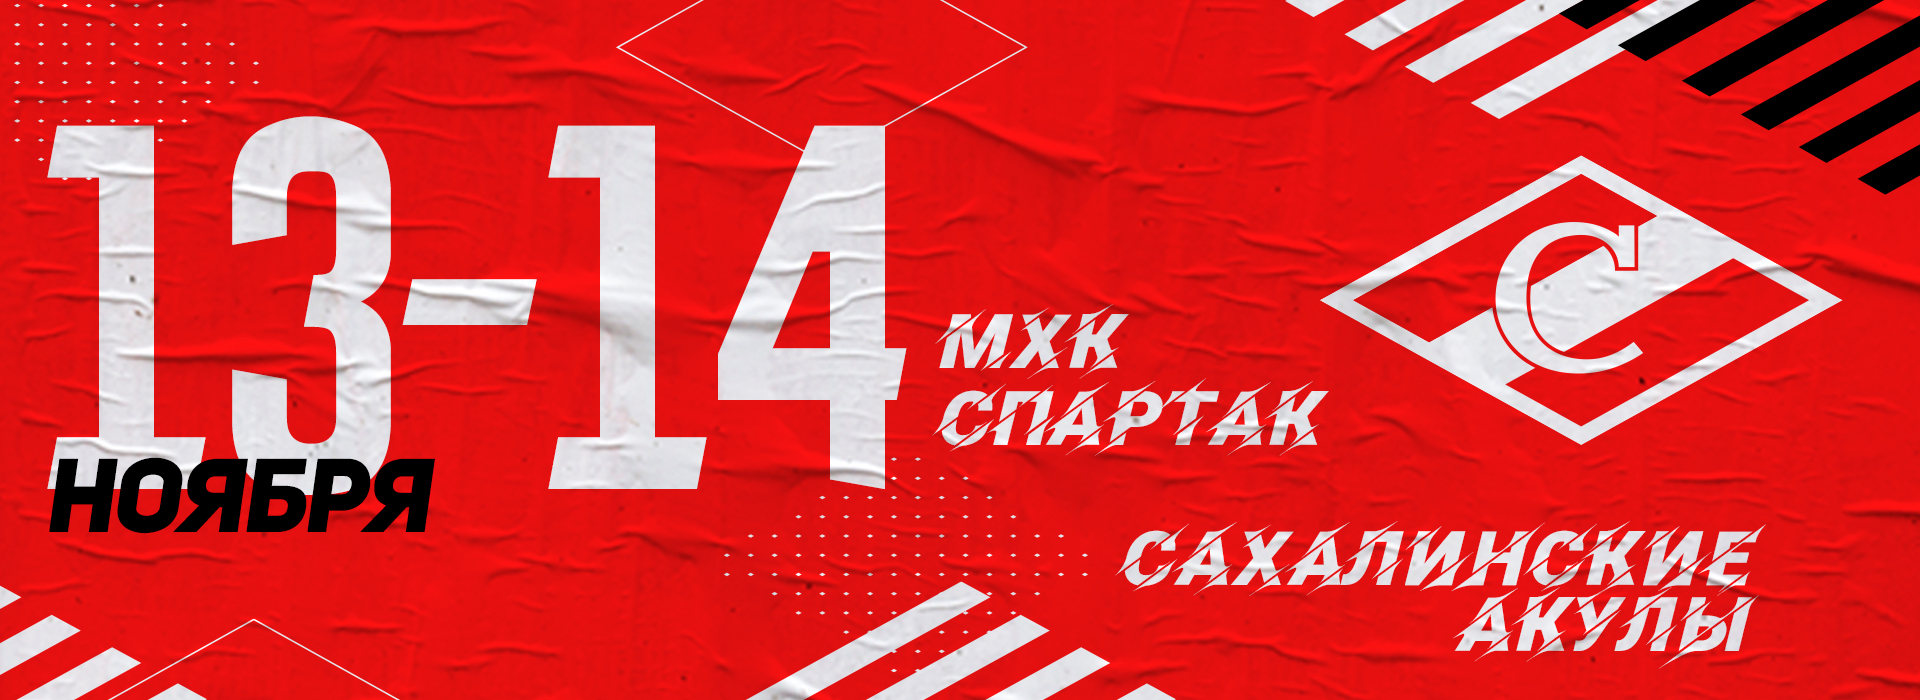 МХК «Спартак» против «островитян»